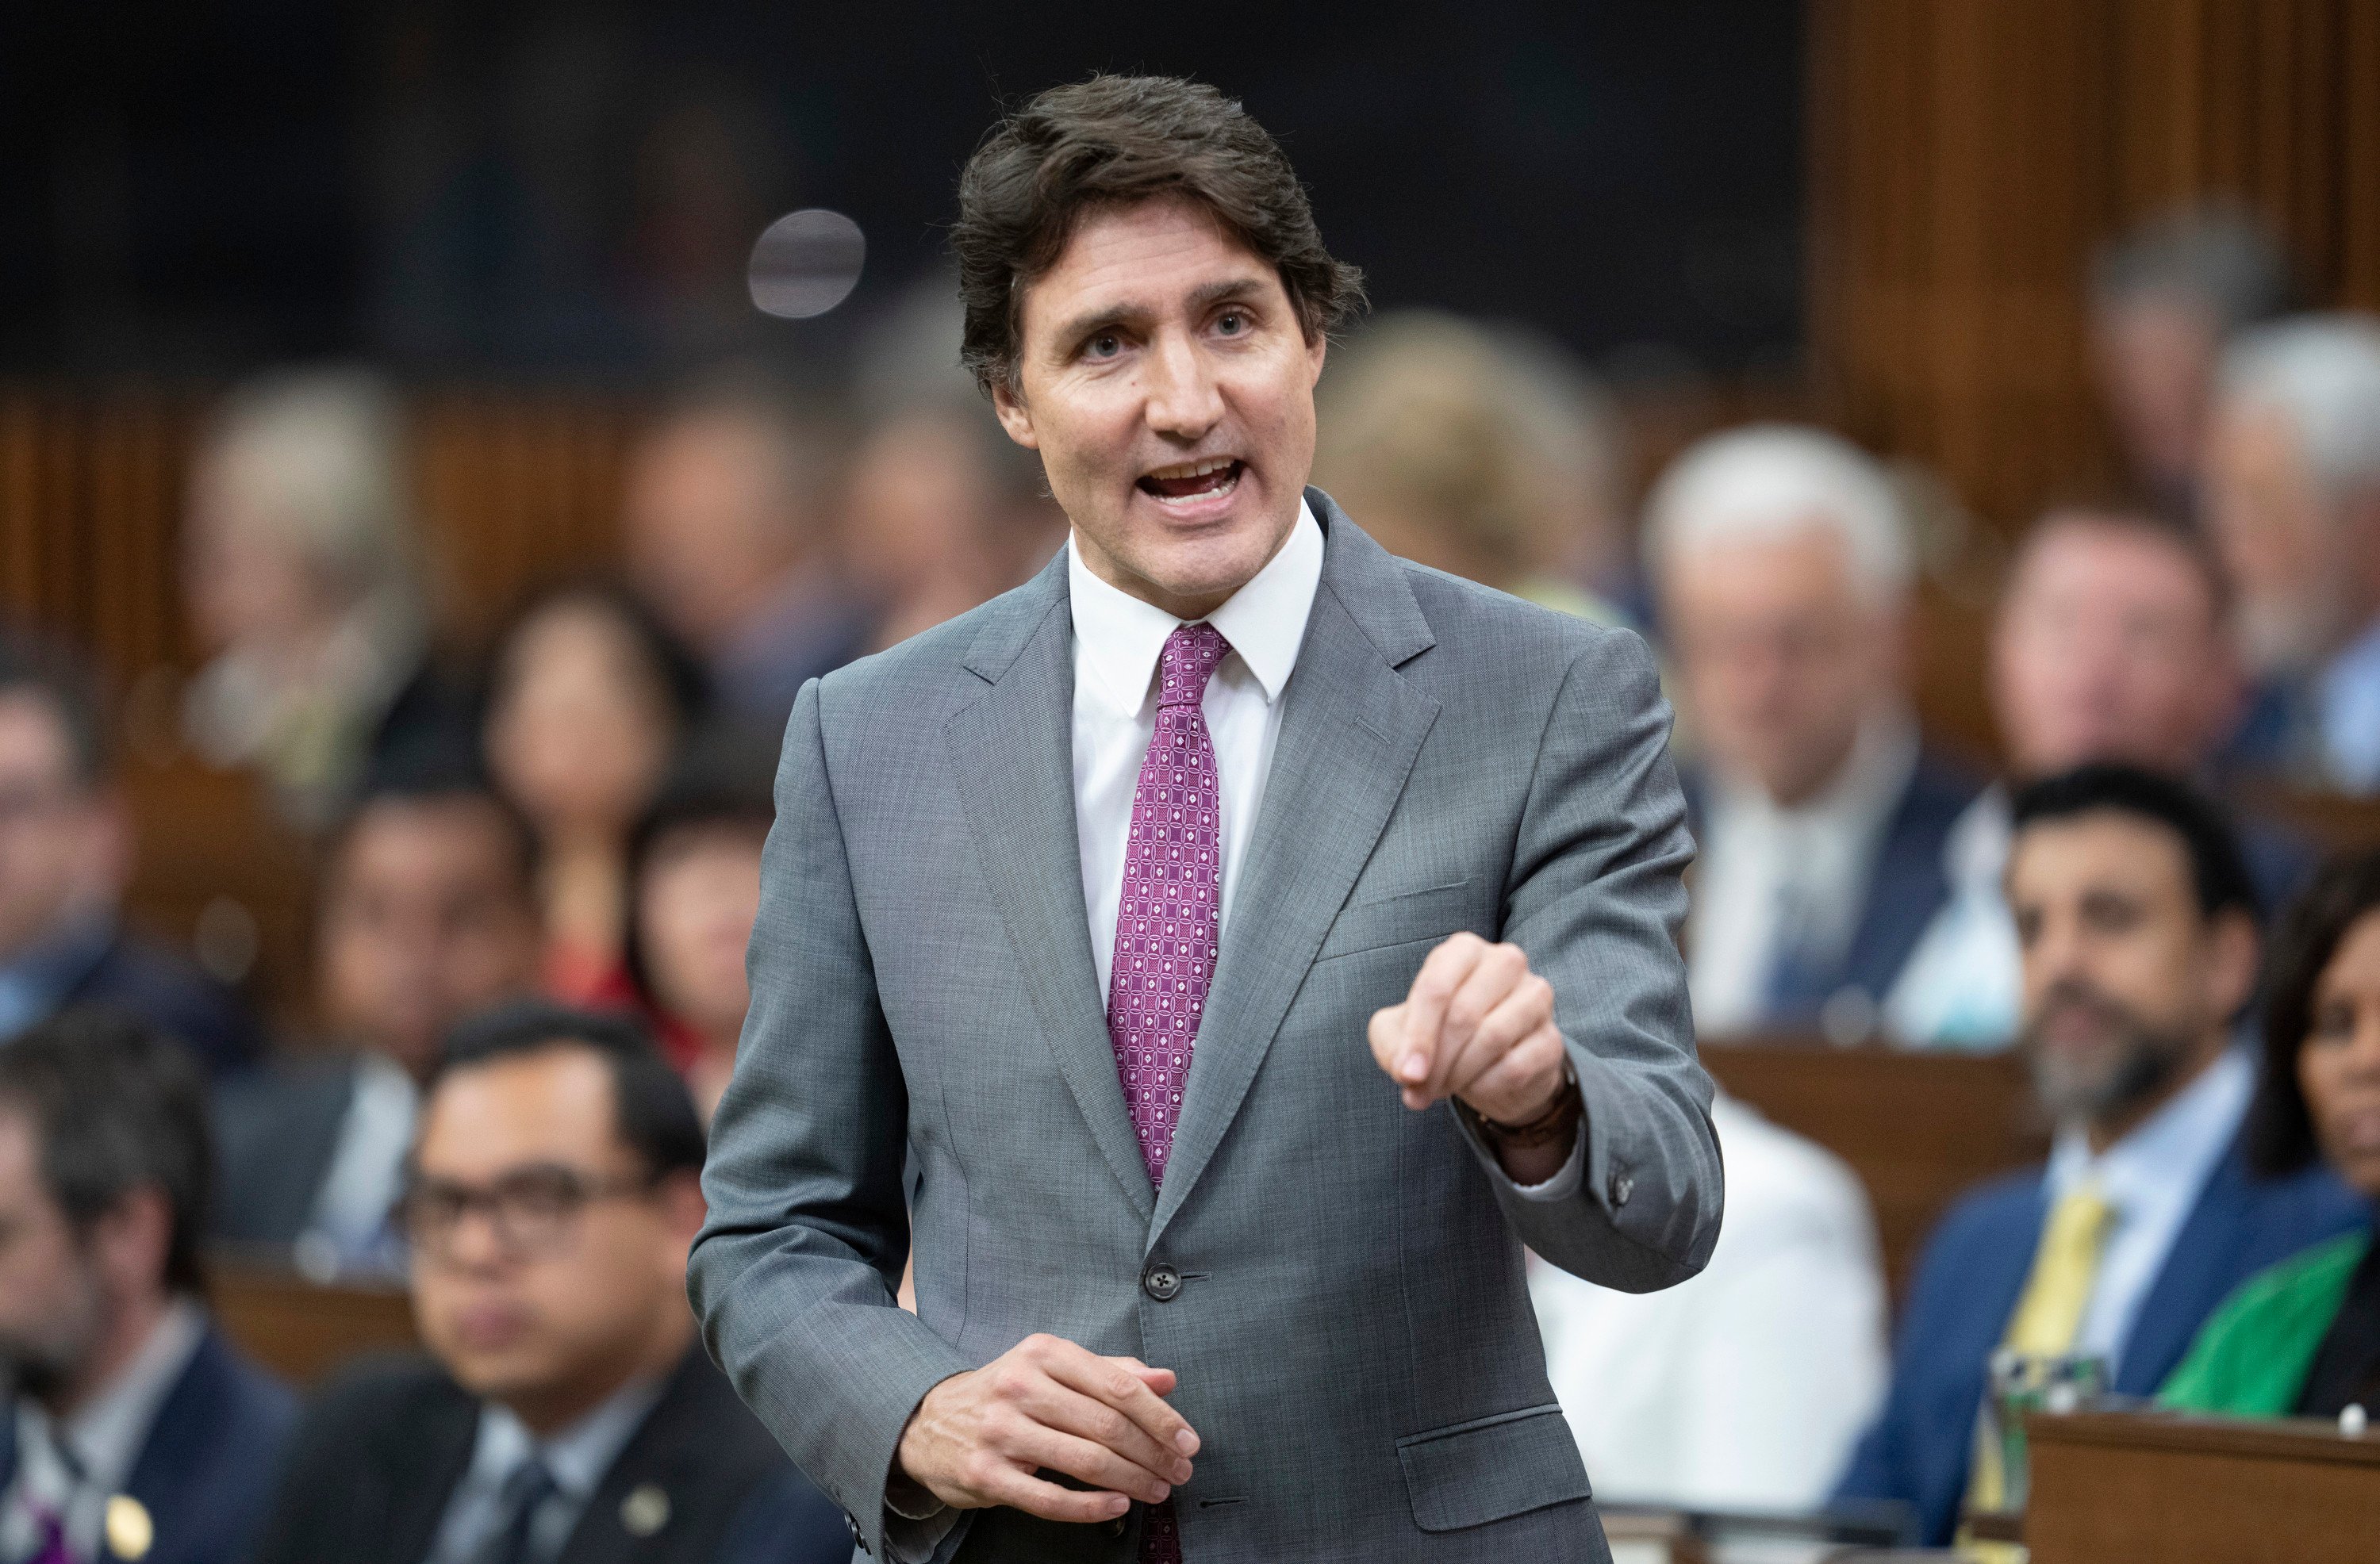 Canada Prime Minister Justin Trudeau in parliament last month. Photo: The Canadian Press via AP